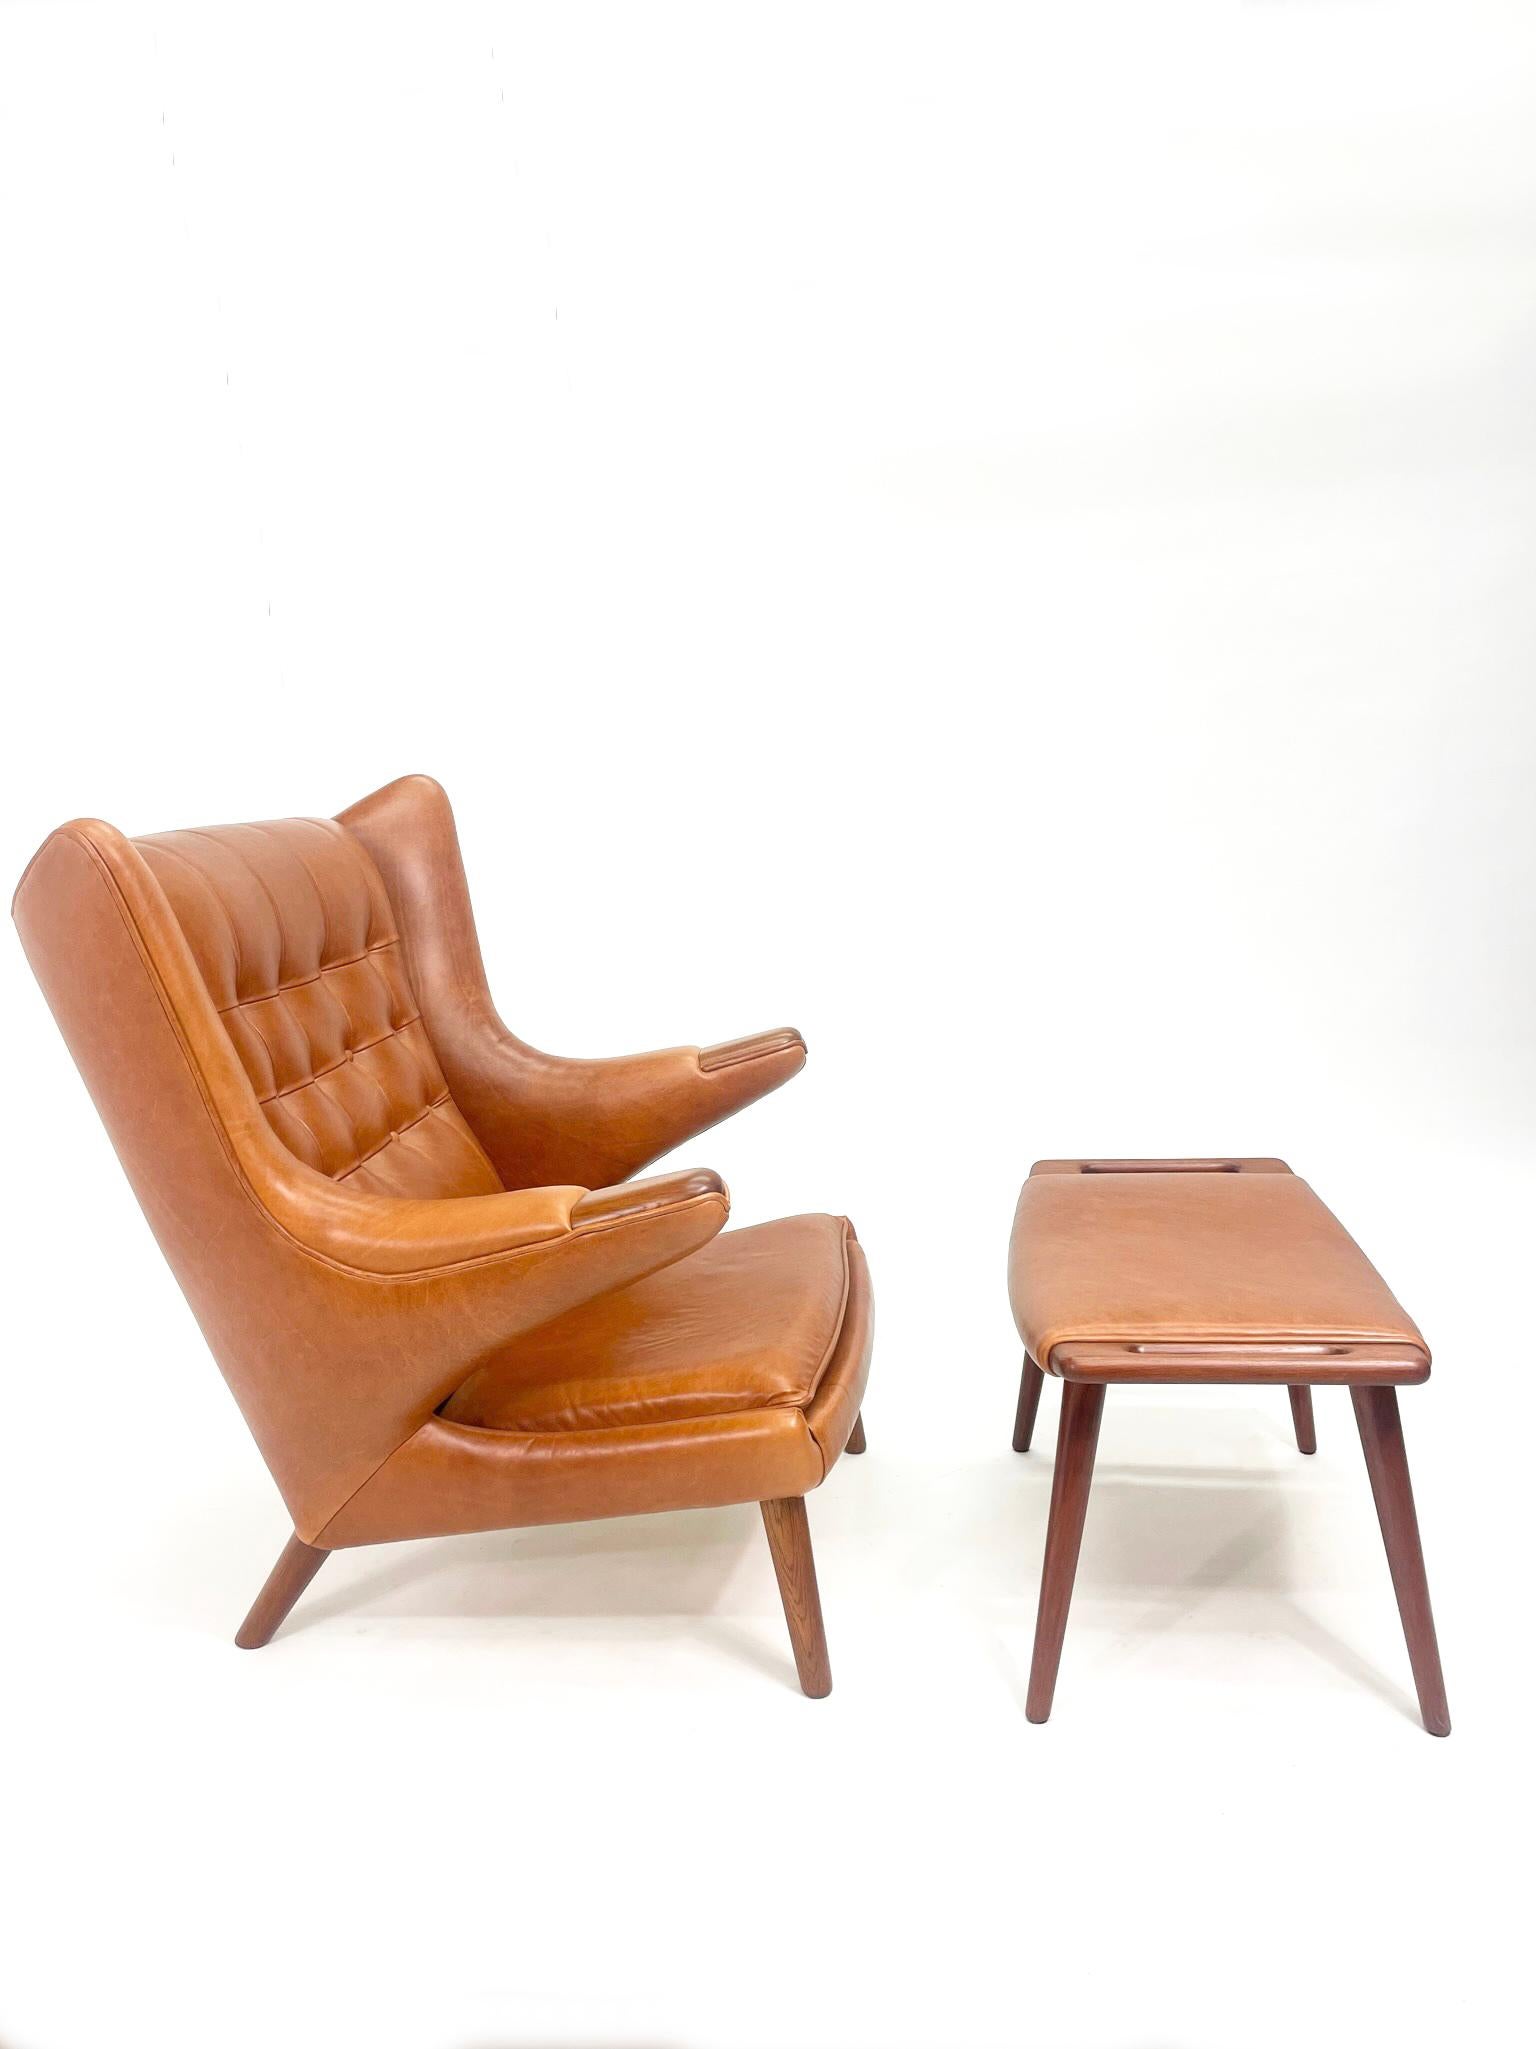 Hans Wegner Papa Bear Chair & Ottoman for A.P. Stolen Denmark, 1950's For Sale 7